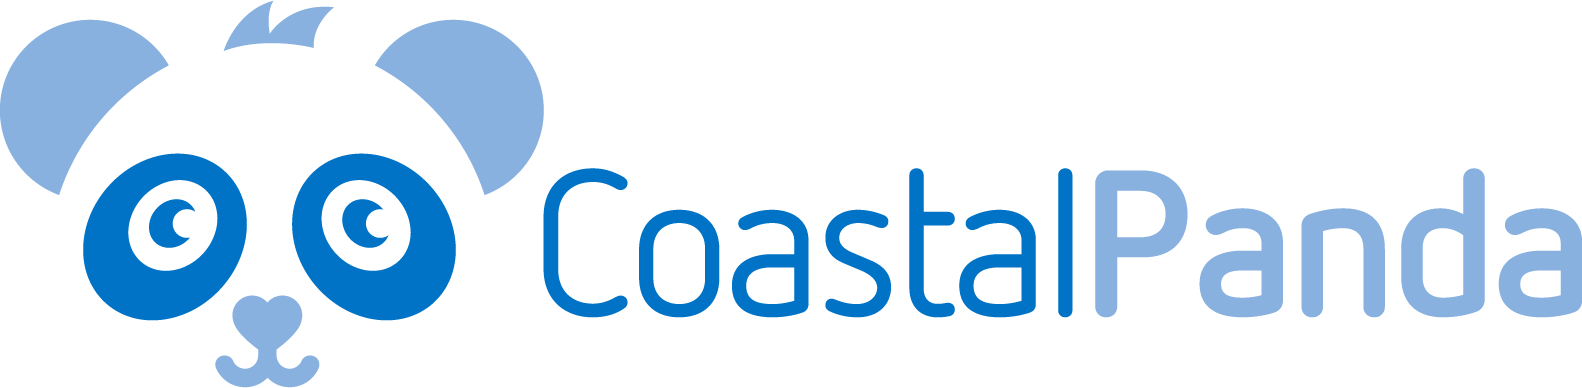 Coastal Panda logo